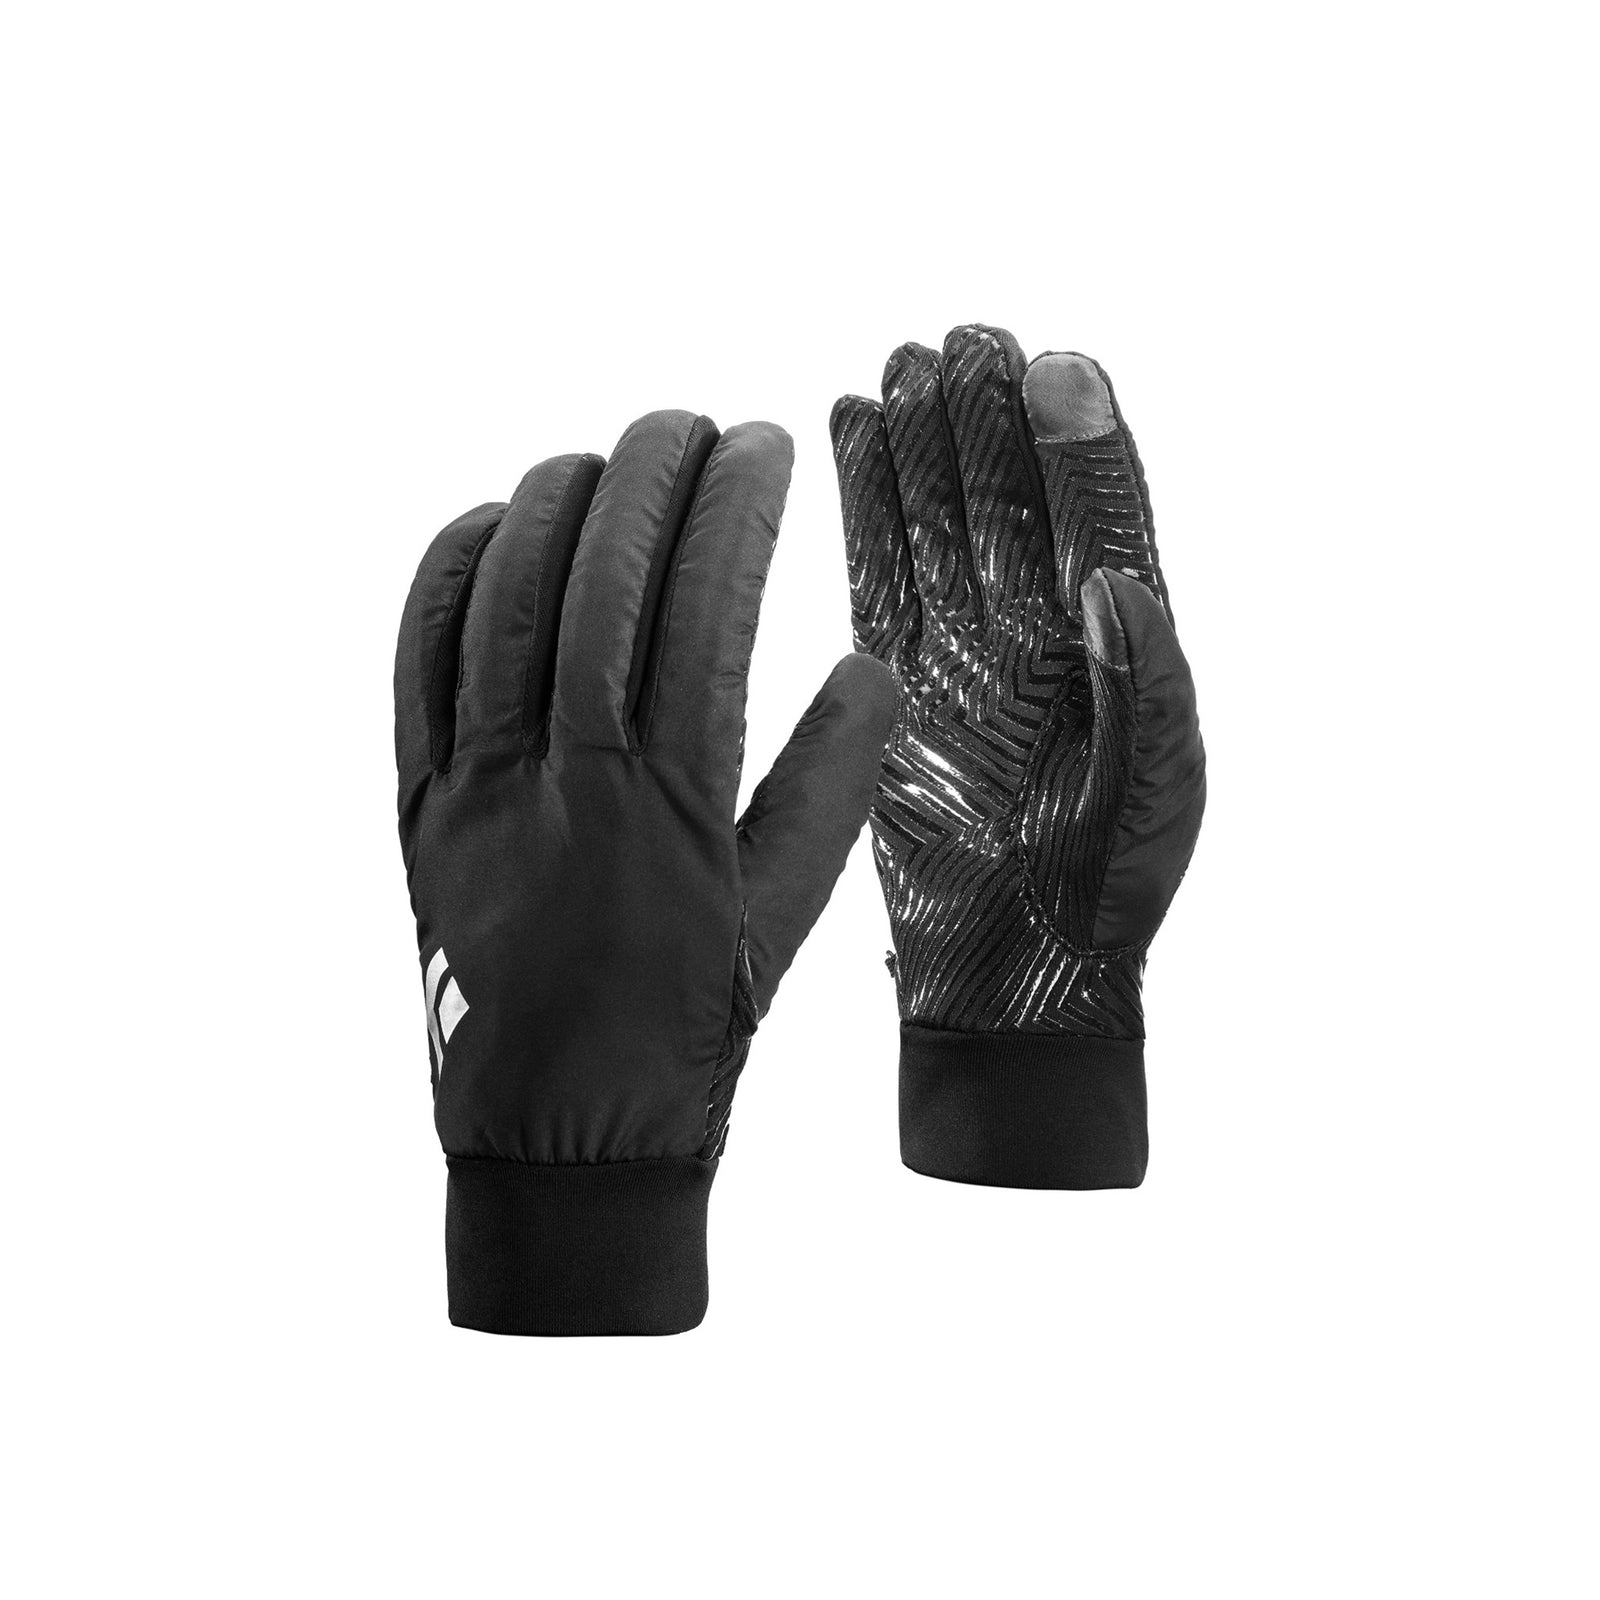 a pair of warm, black gloves